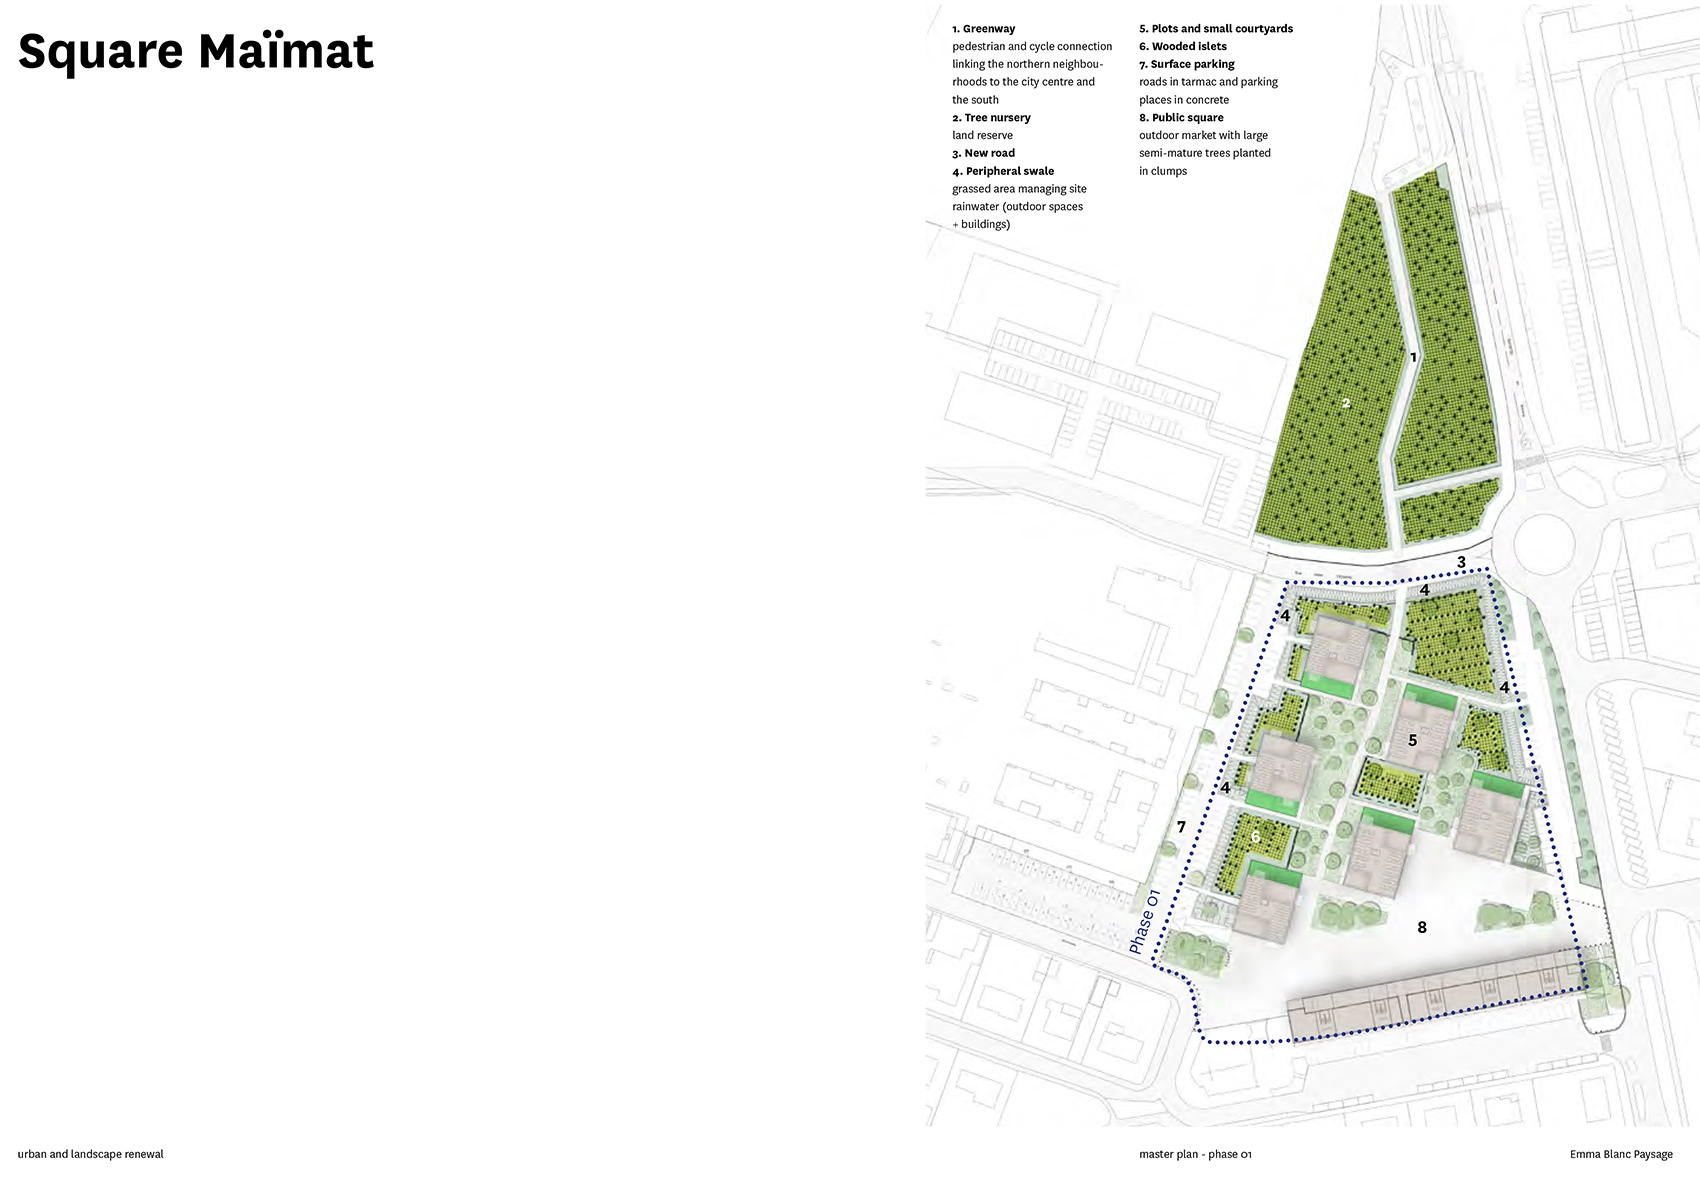 Square Maïmat住宅区更新，法国/释放公共空间，连接社区居民-97